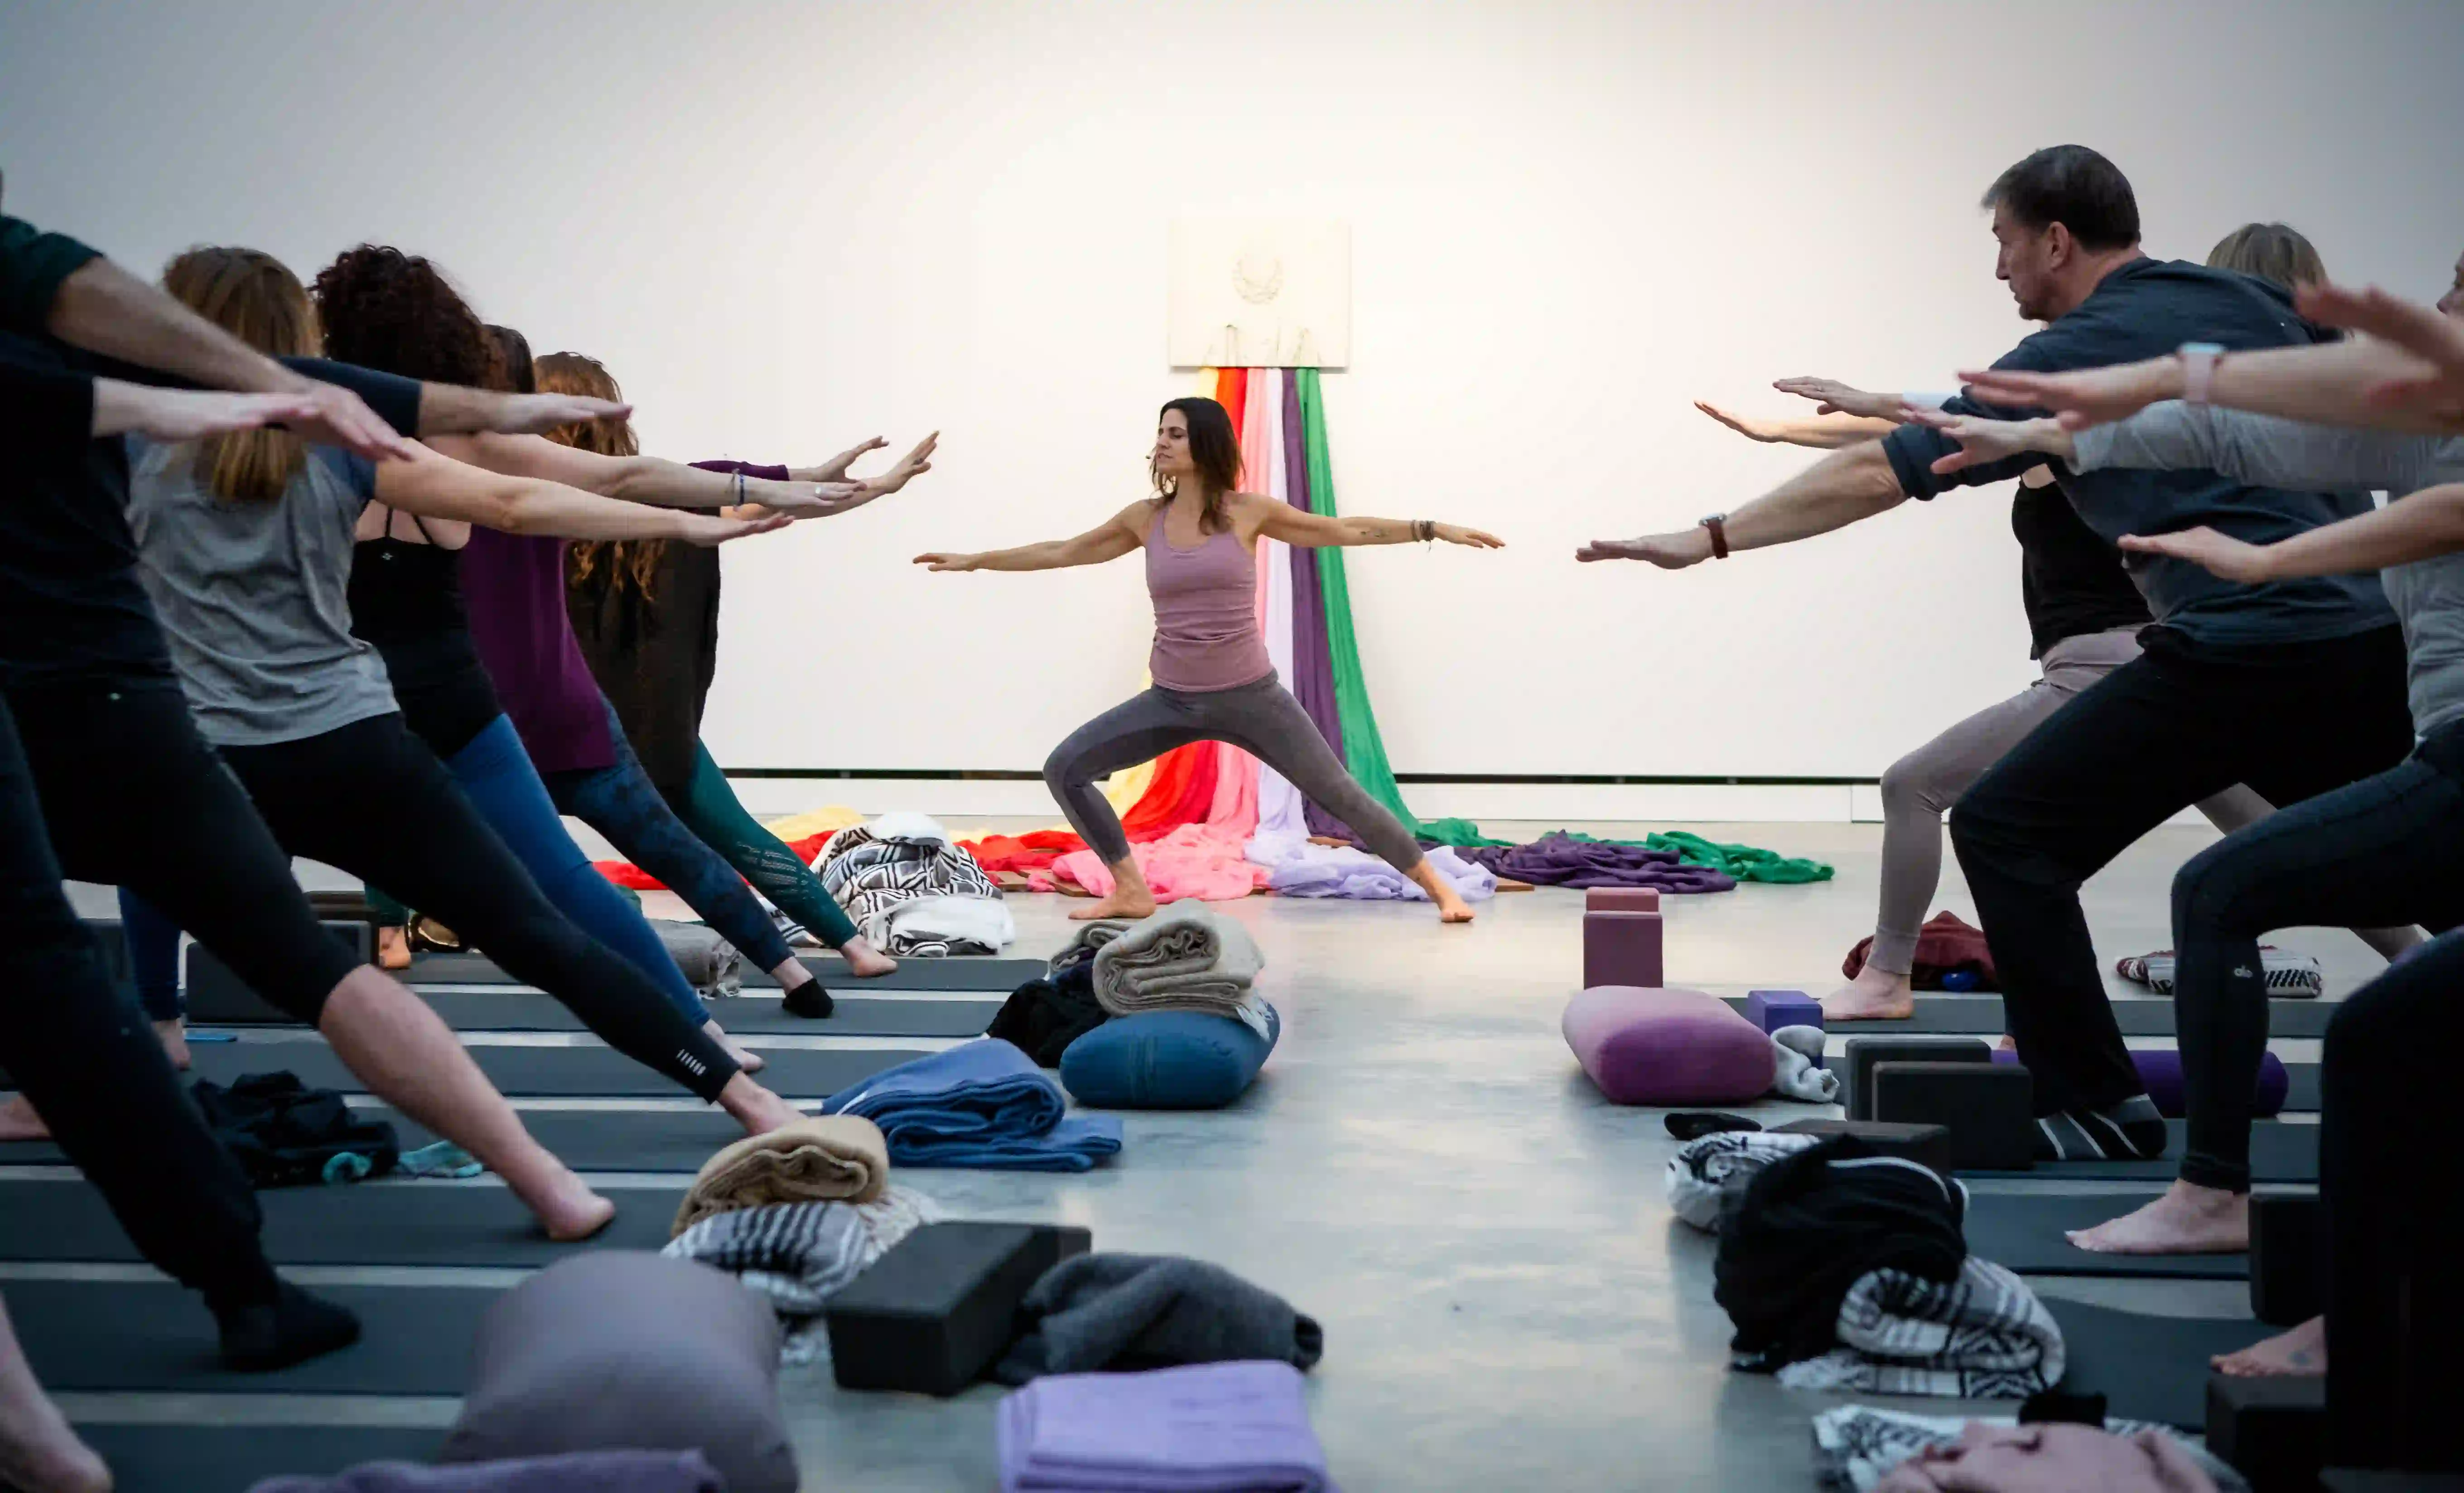 Magazzino’s annual Winter Wellness Workshop led by yoga therapist, teacher, and author Jillian Pransky
